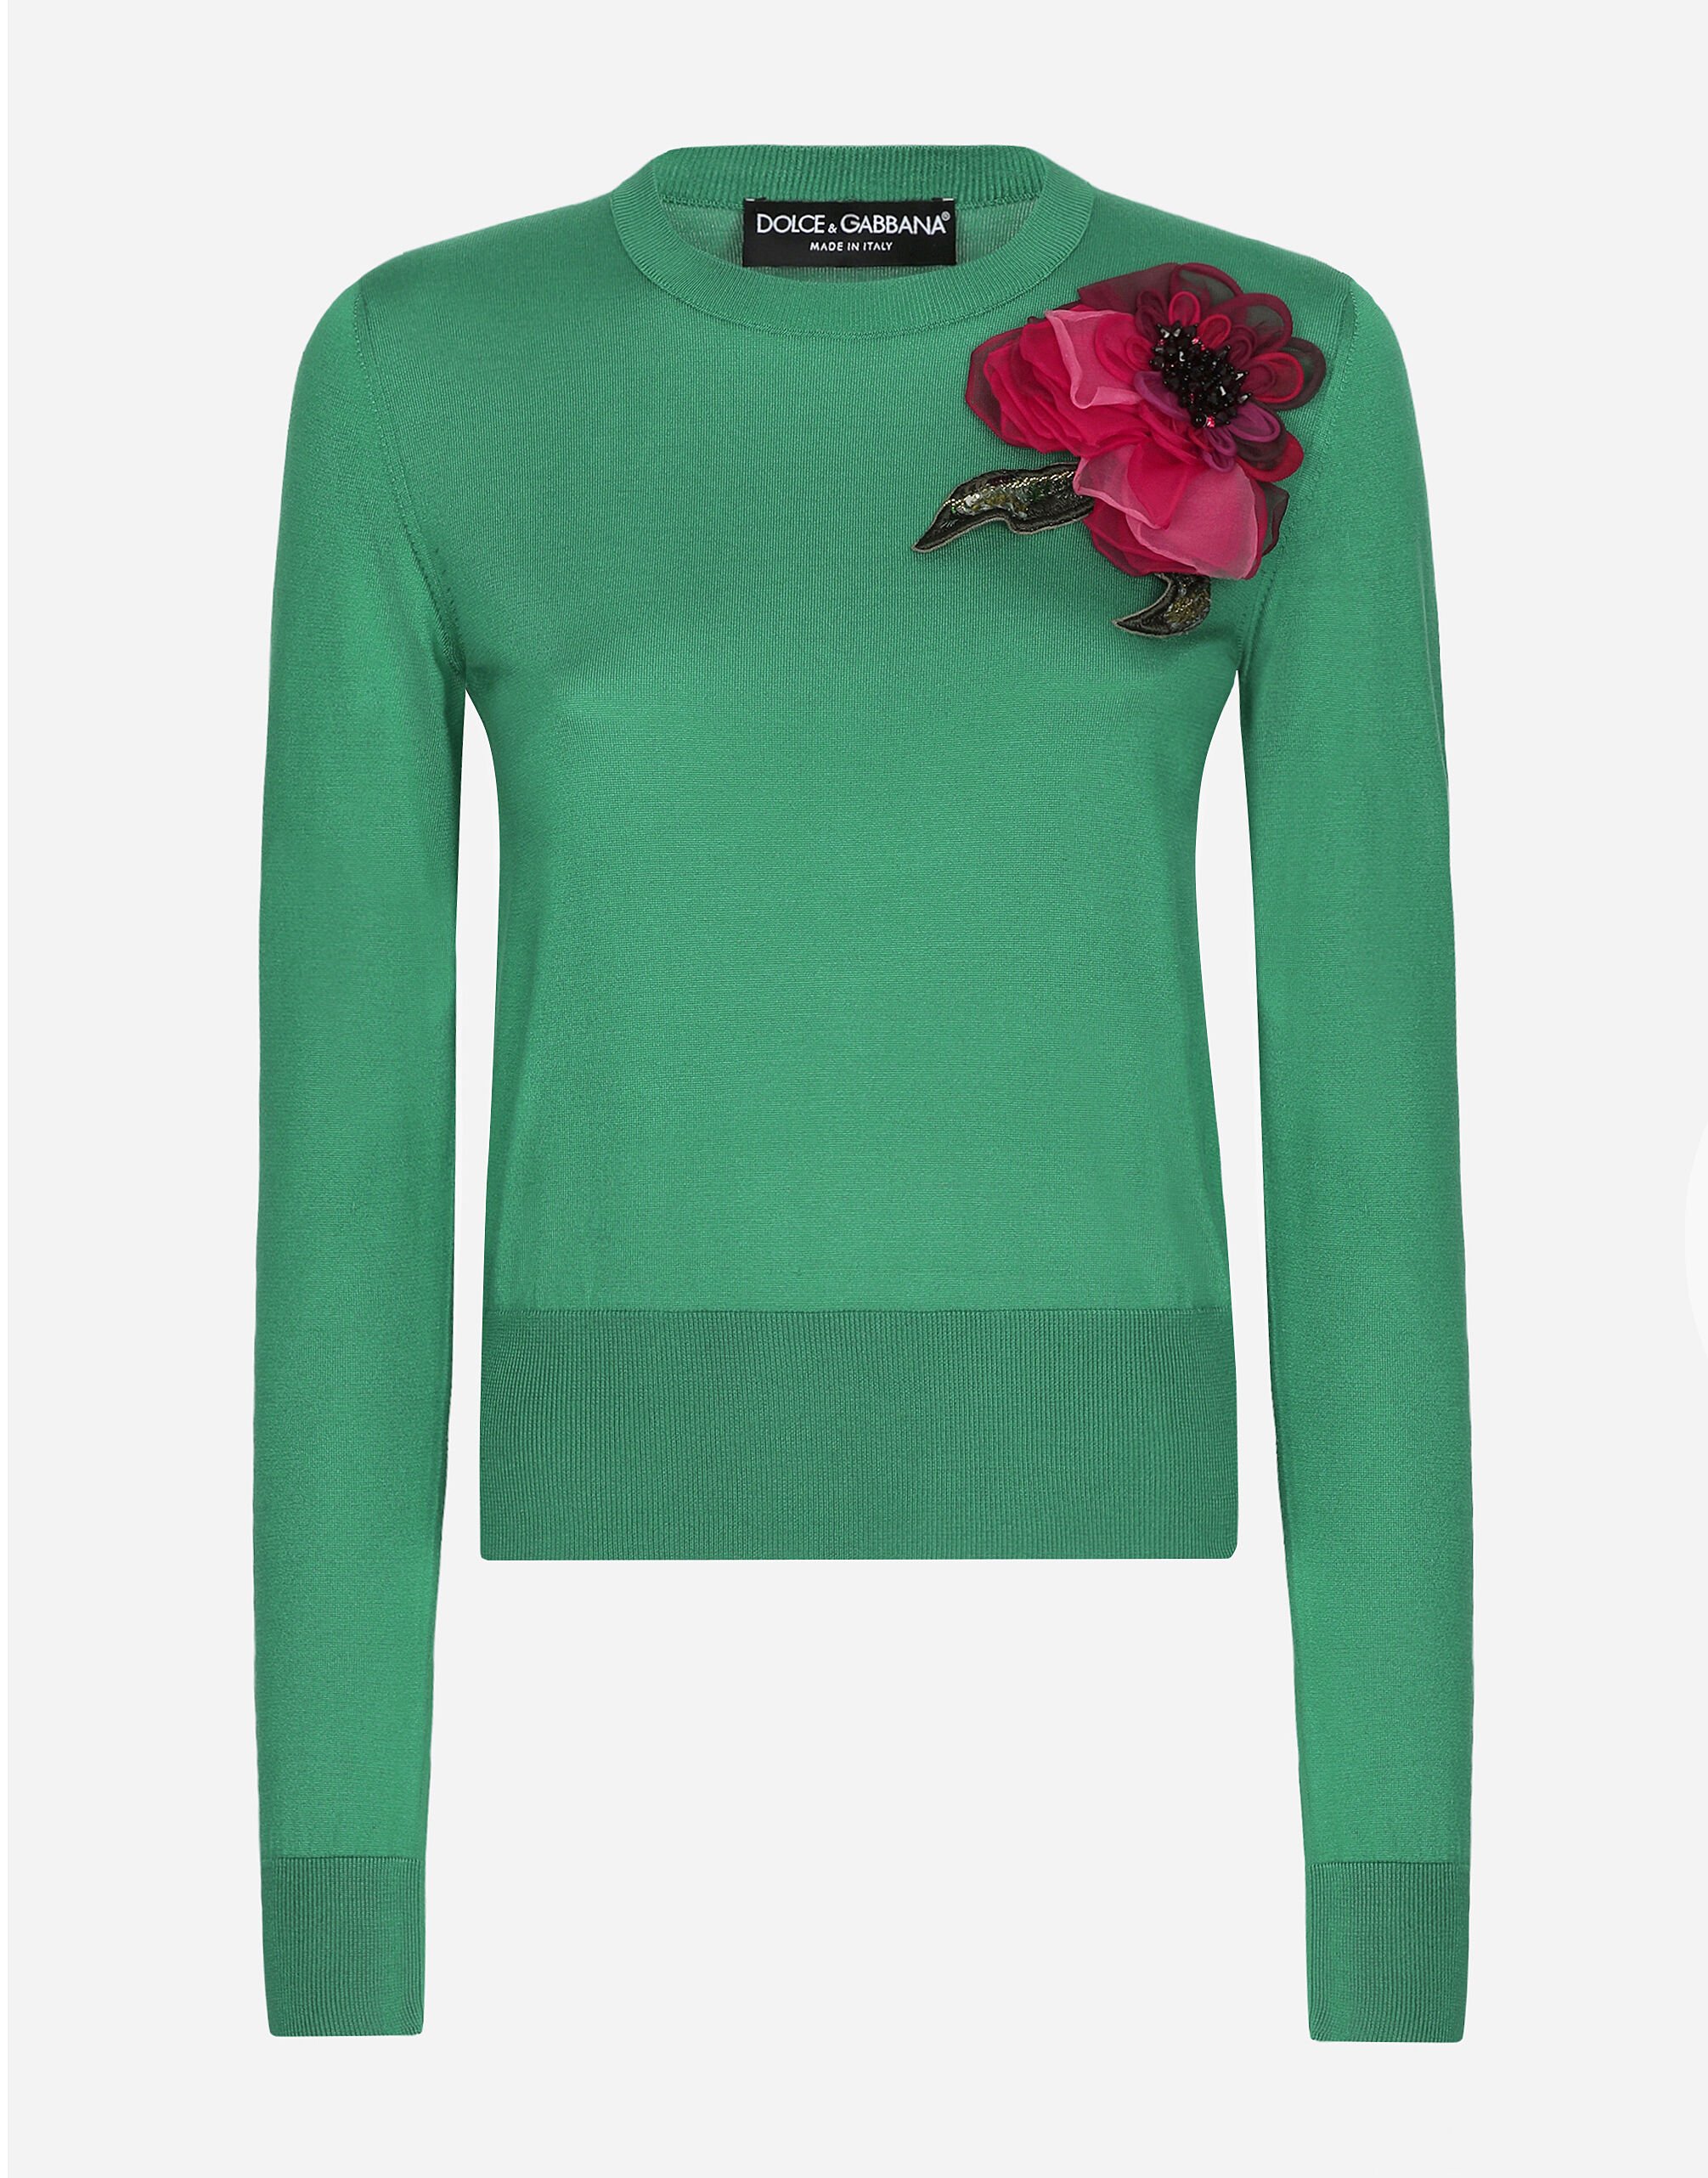 Dolce & Gabbana Silk sweater with flower appliqué Green FXX12ZJBSHX